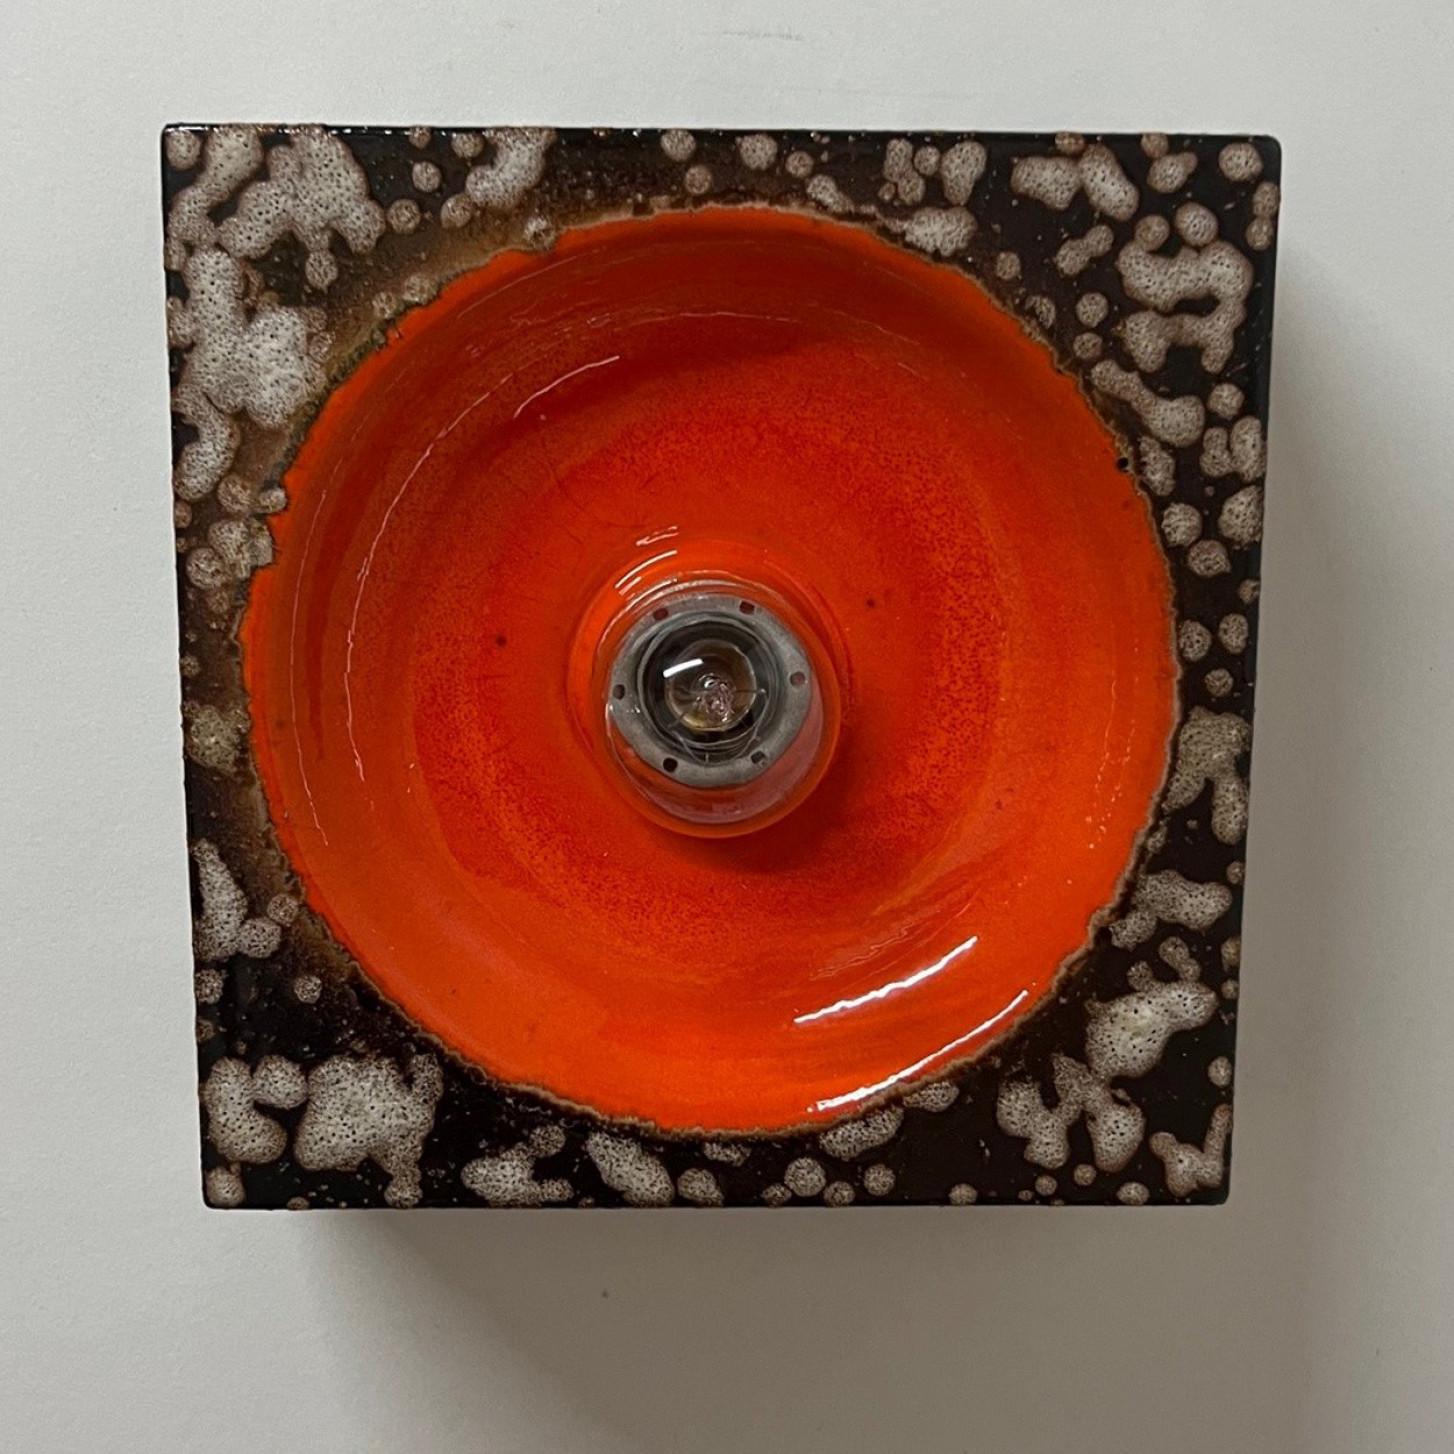 Glazed 1 of 3 Brown Beige Orange Square Ceramic Wall Lights by Hustadt Keramik, Germany For Sale